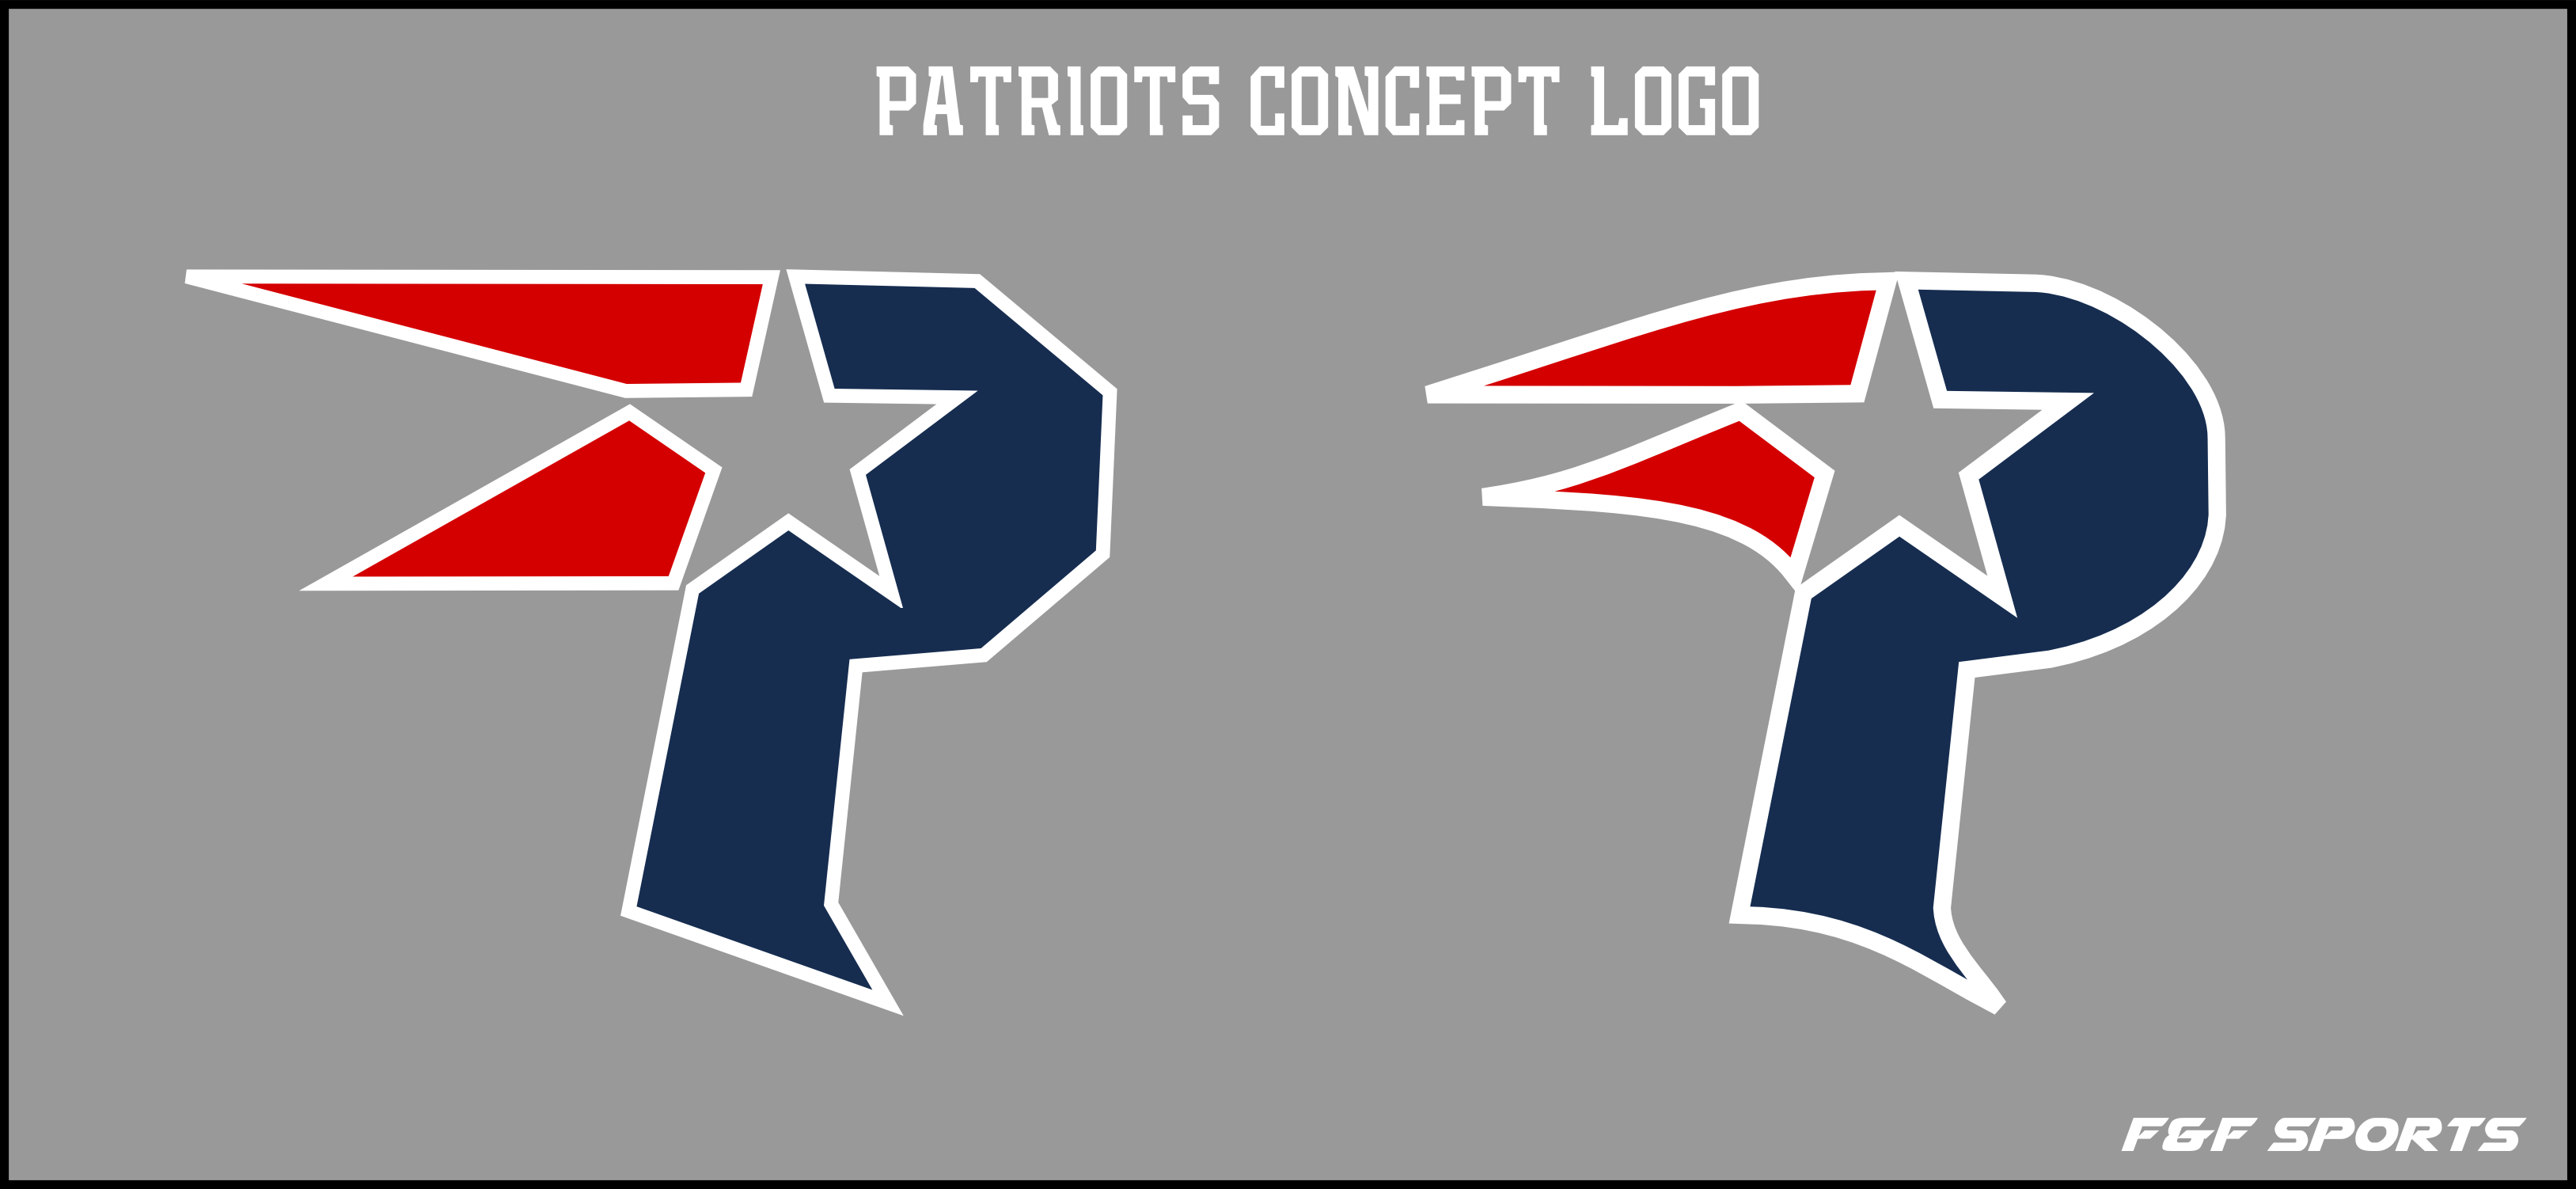 Patriots Sports Logo - New England Patriots Logo Concept *Uniform Added 2/3* - Concepts ...